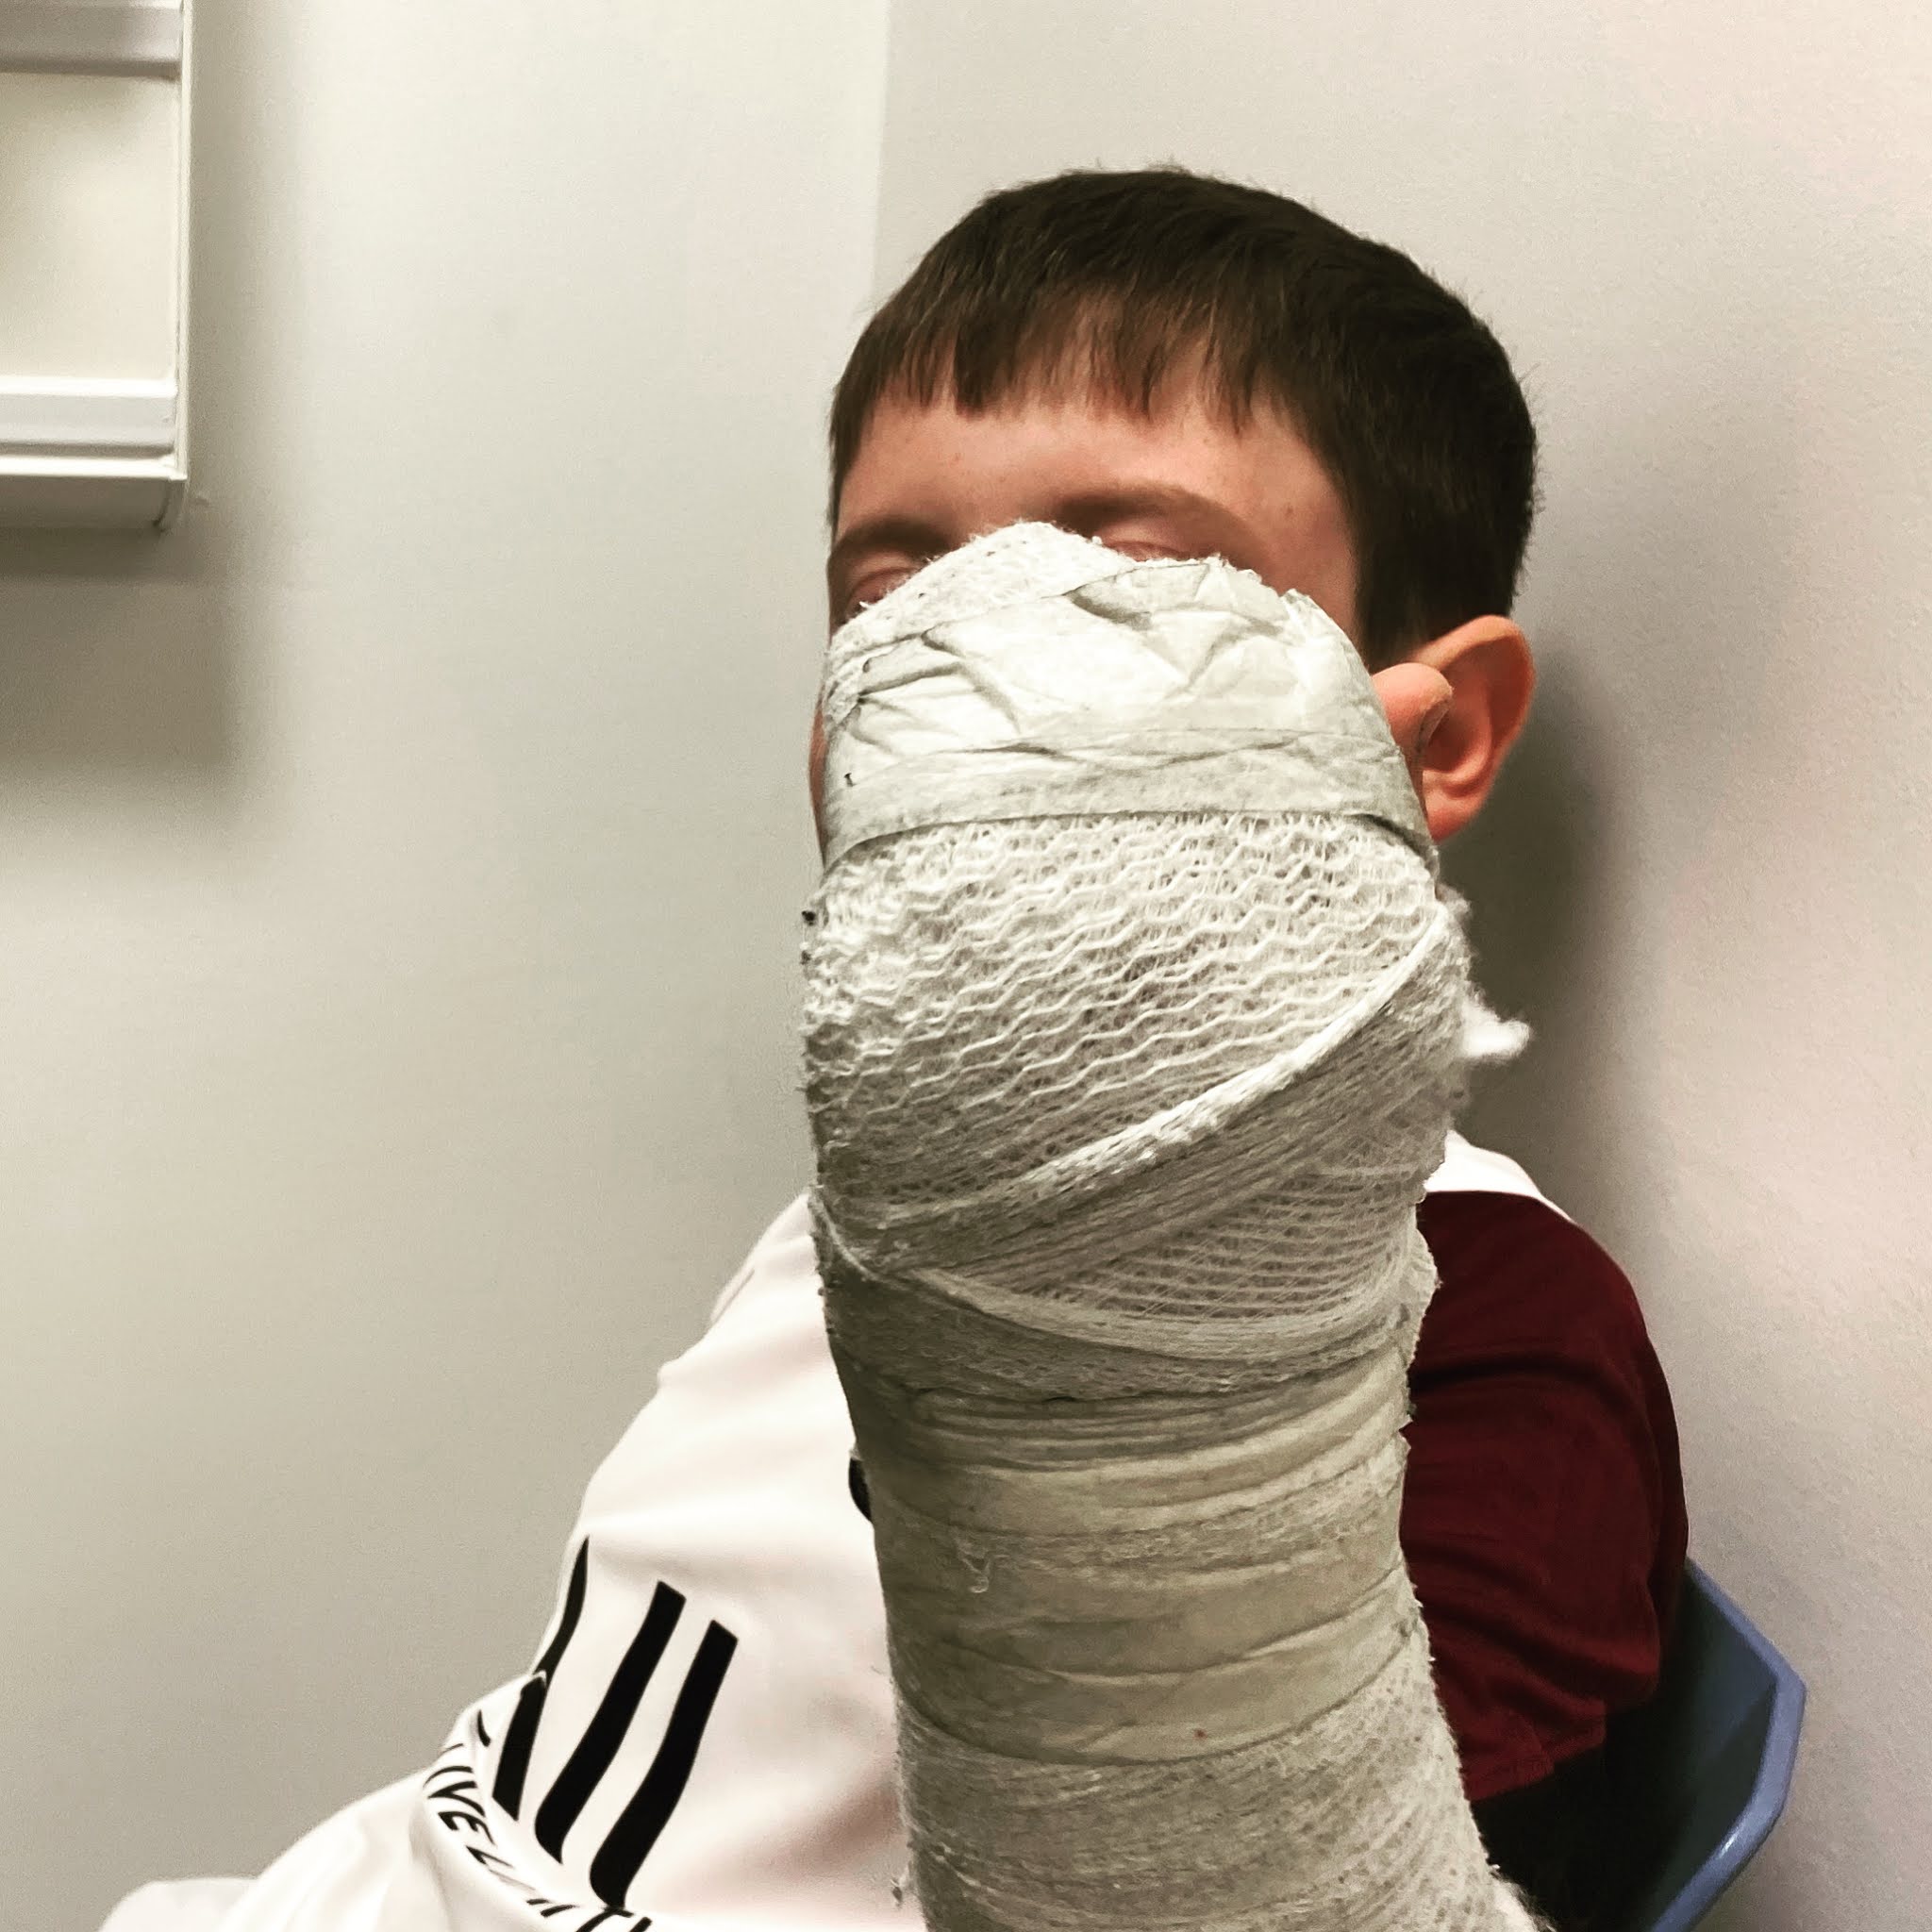 boy with a bandaged arm